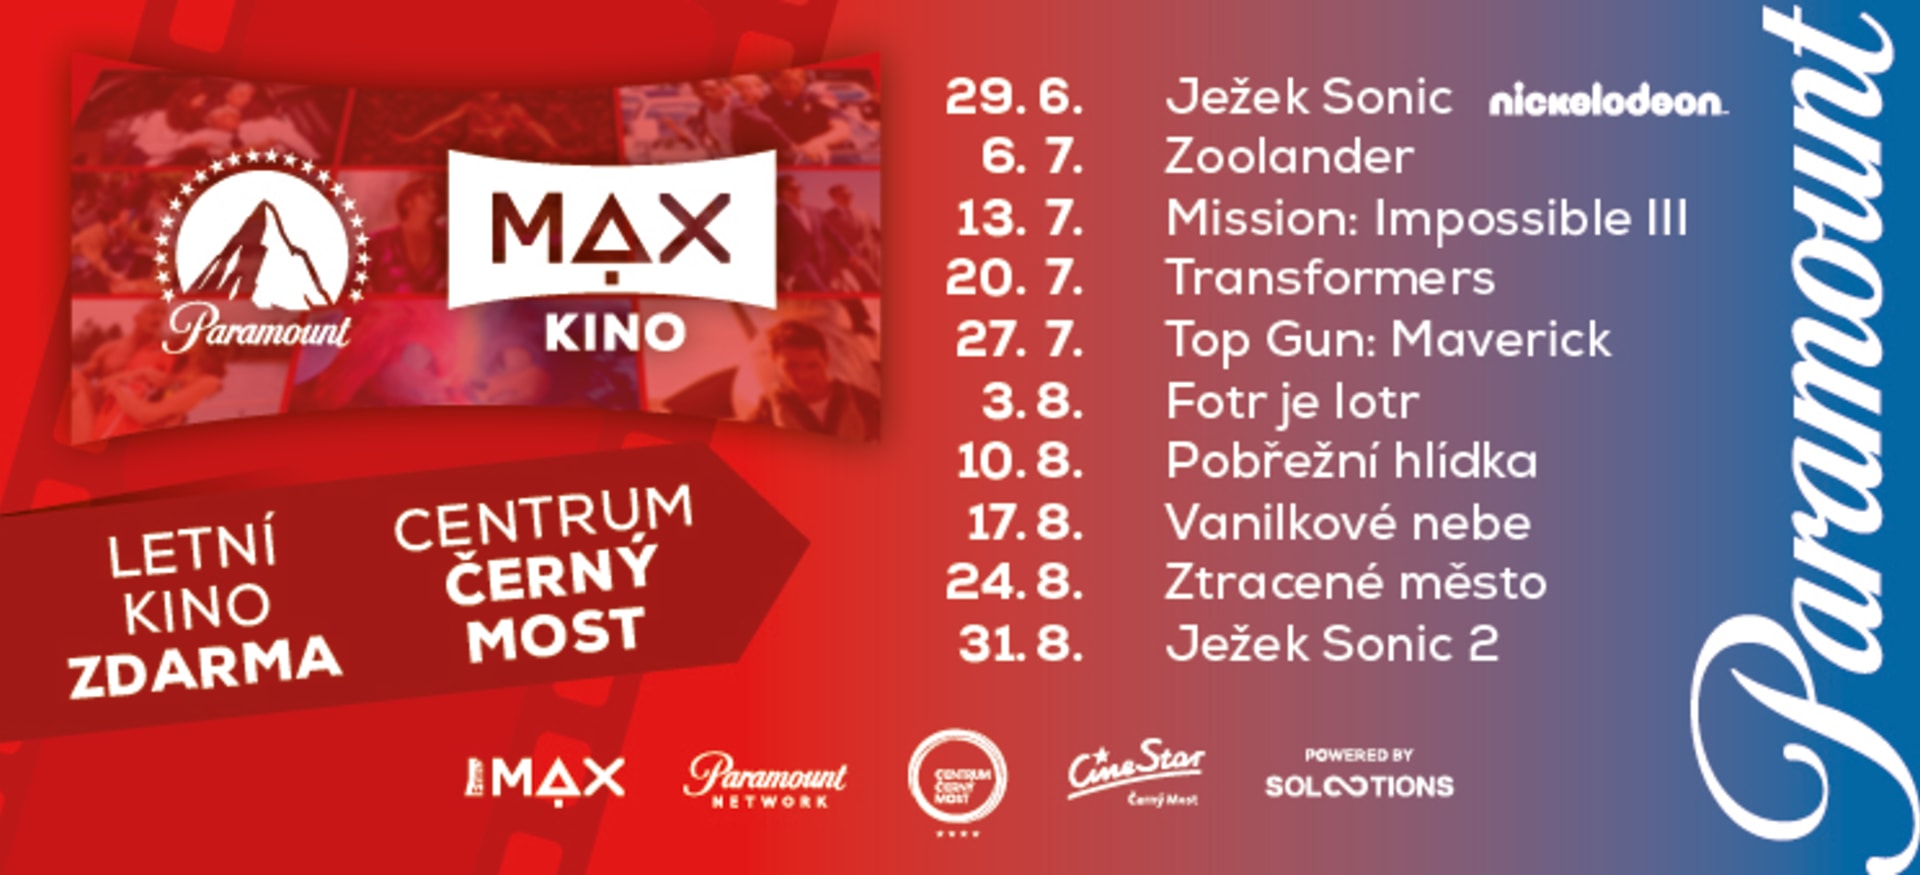 Paramout MAX kino_program